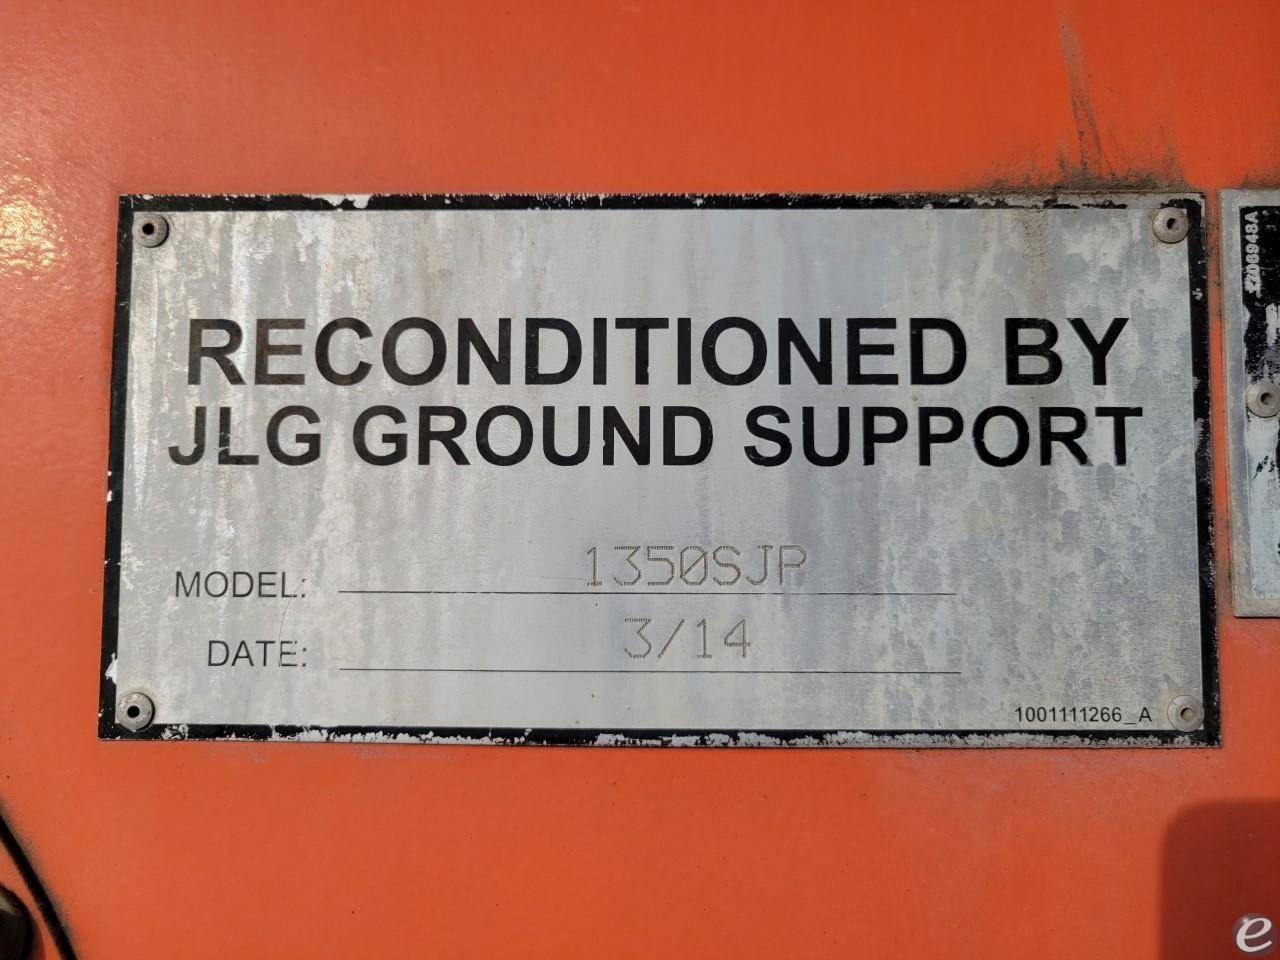 2007 JLG 1350SJP